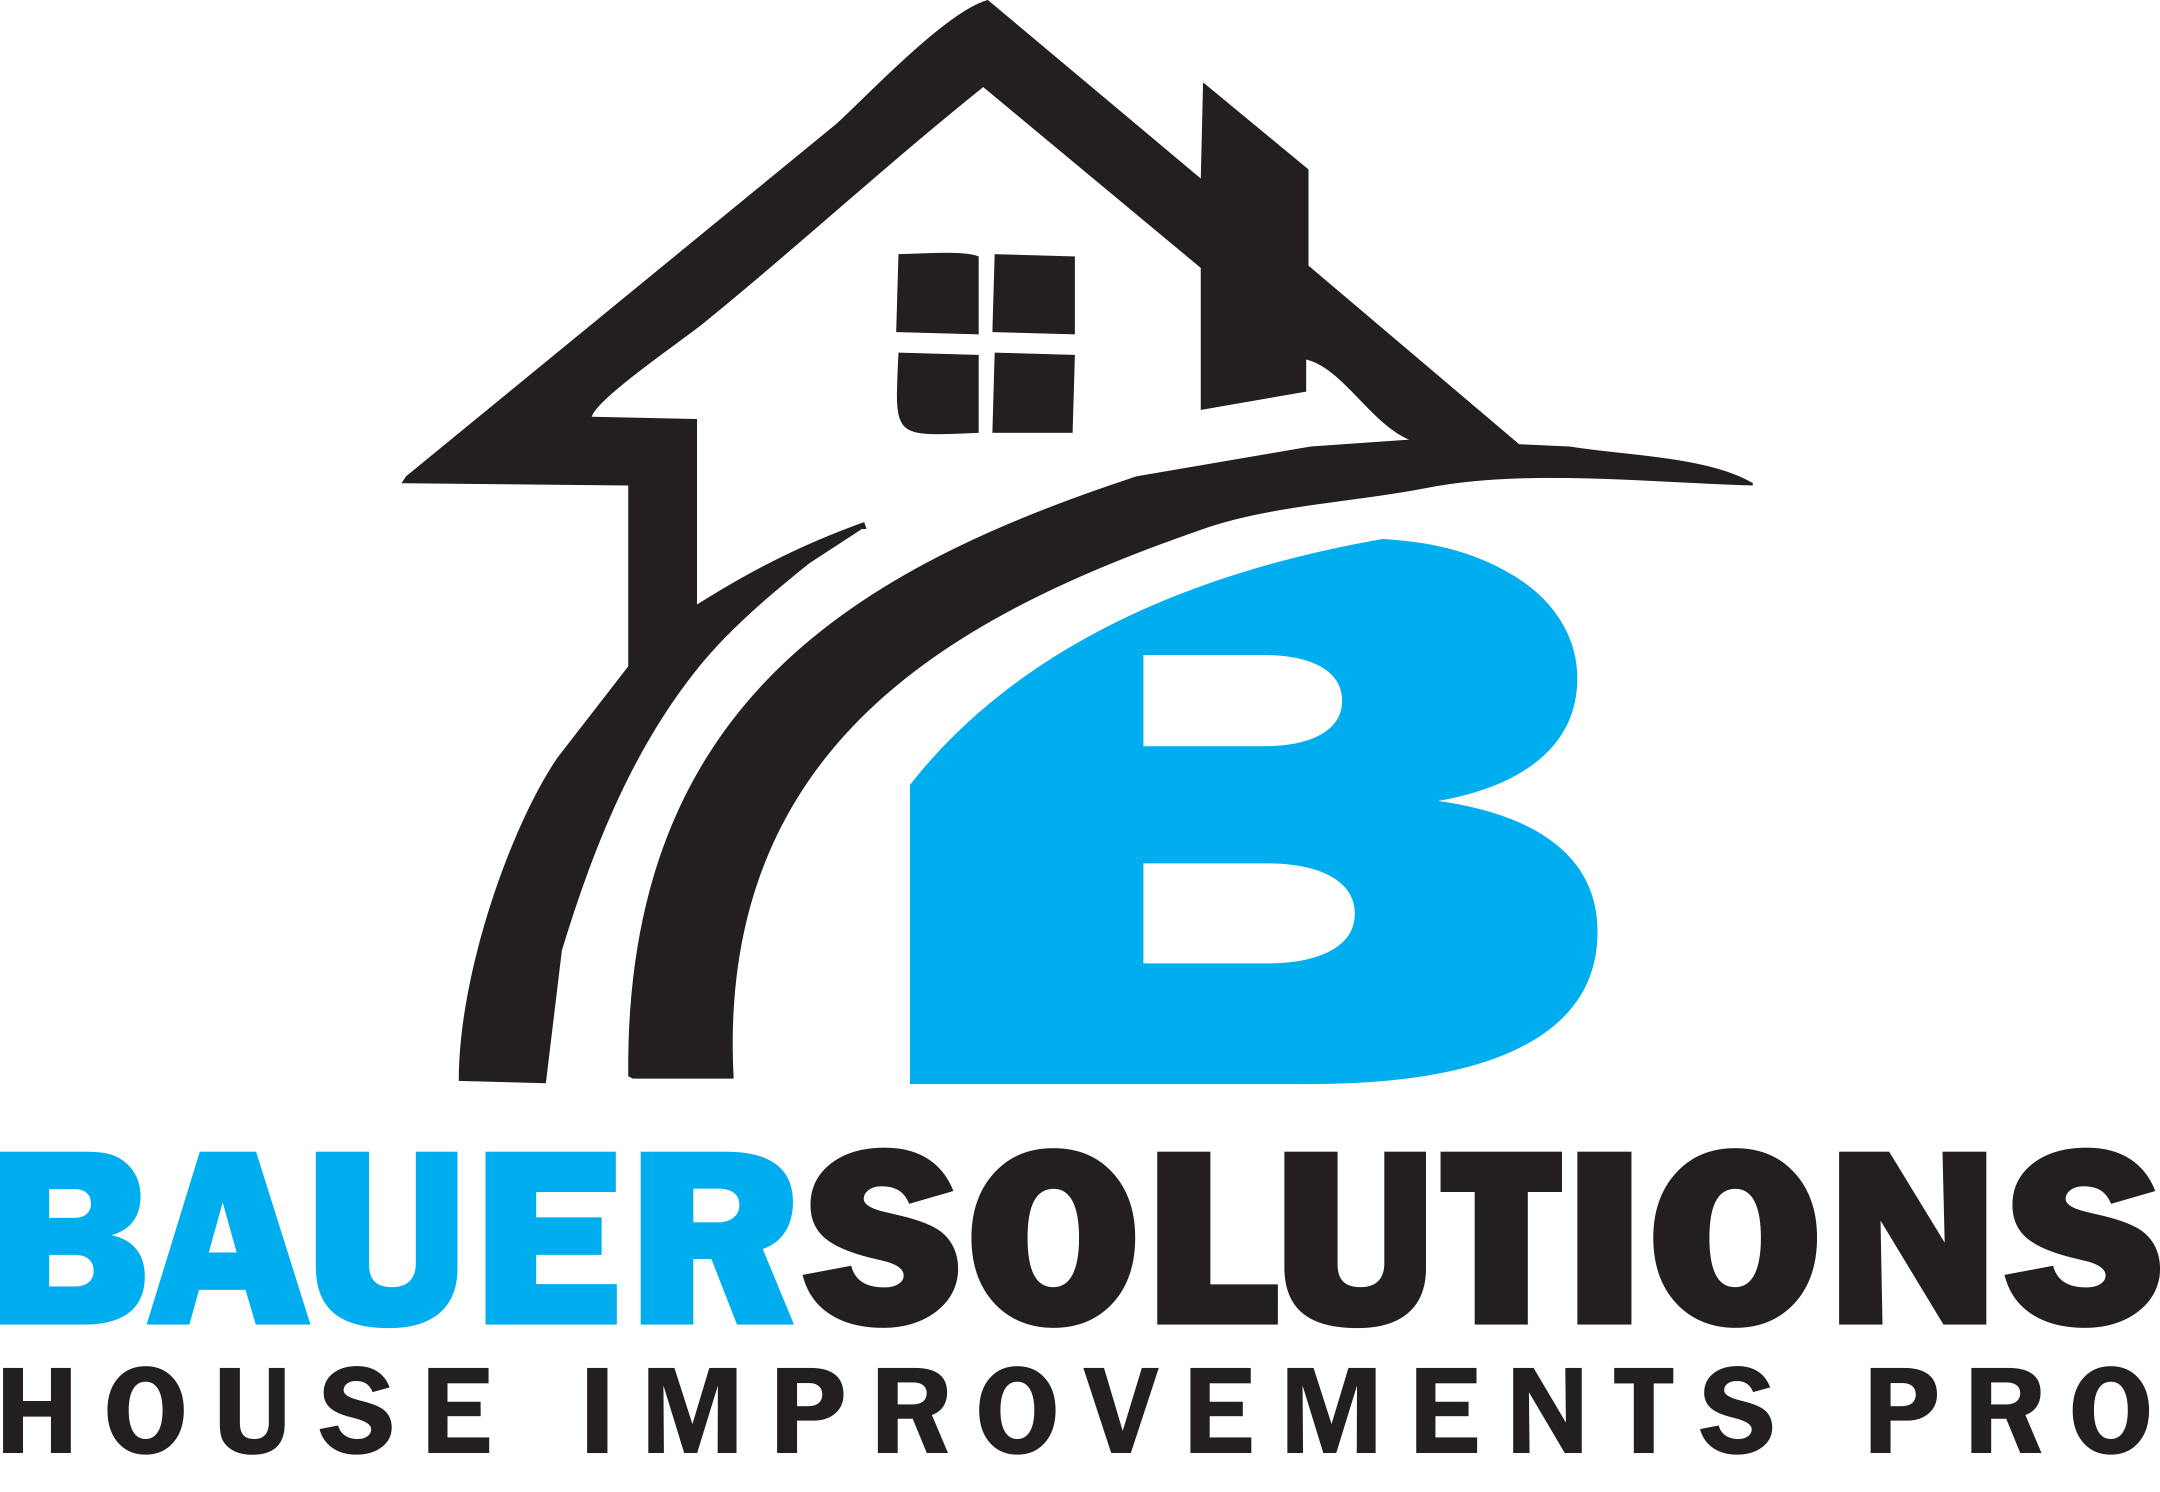 BauerSolutions Logo